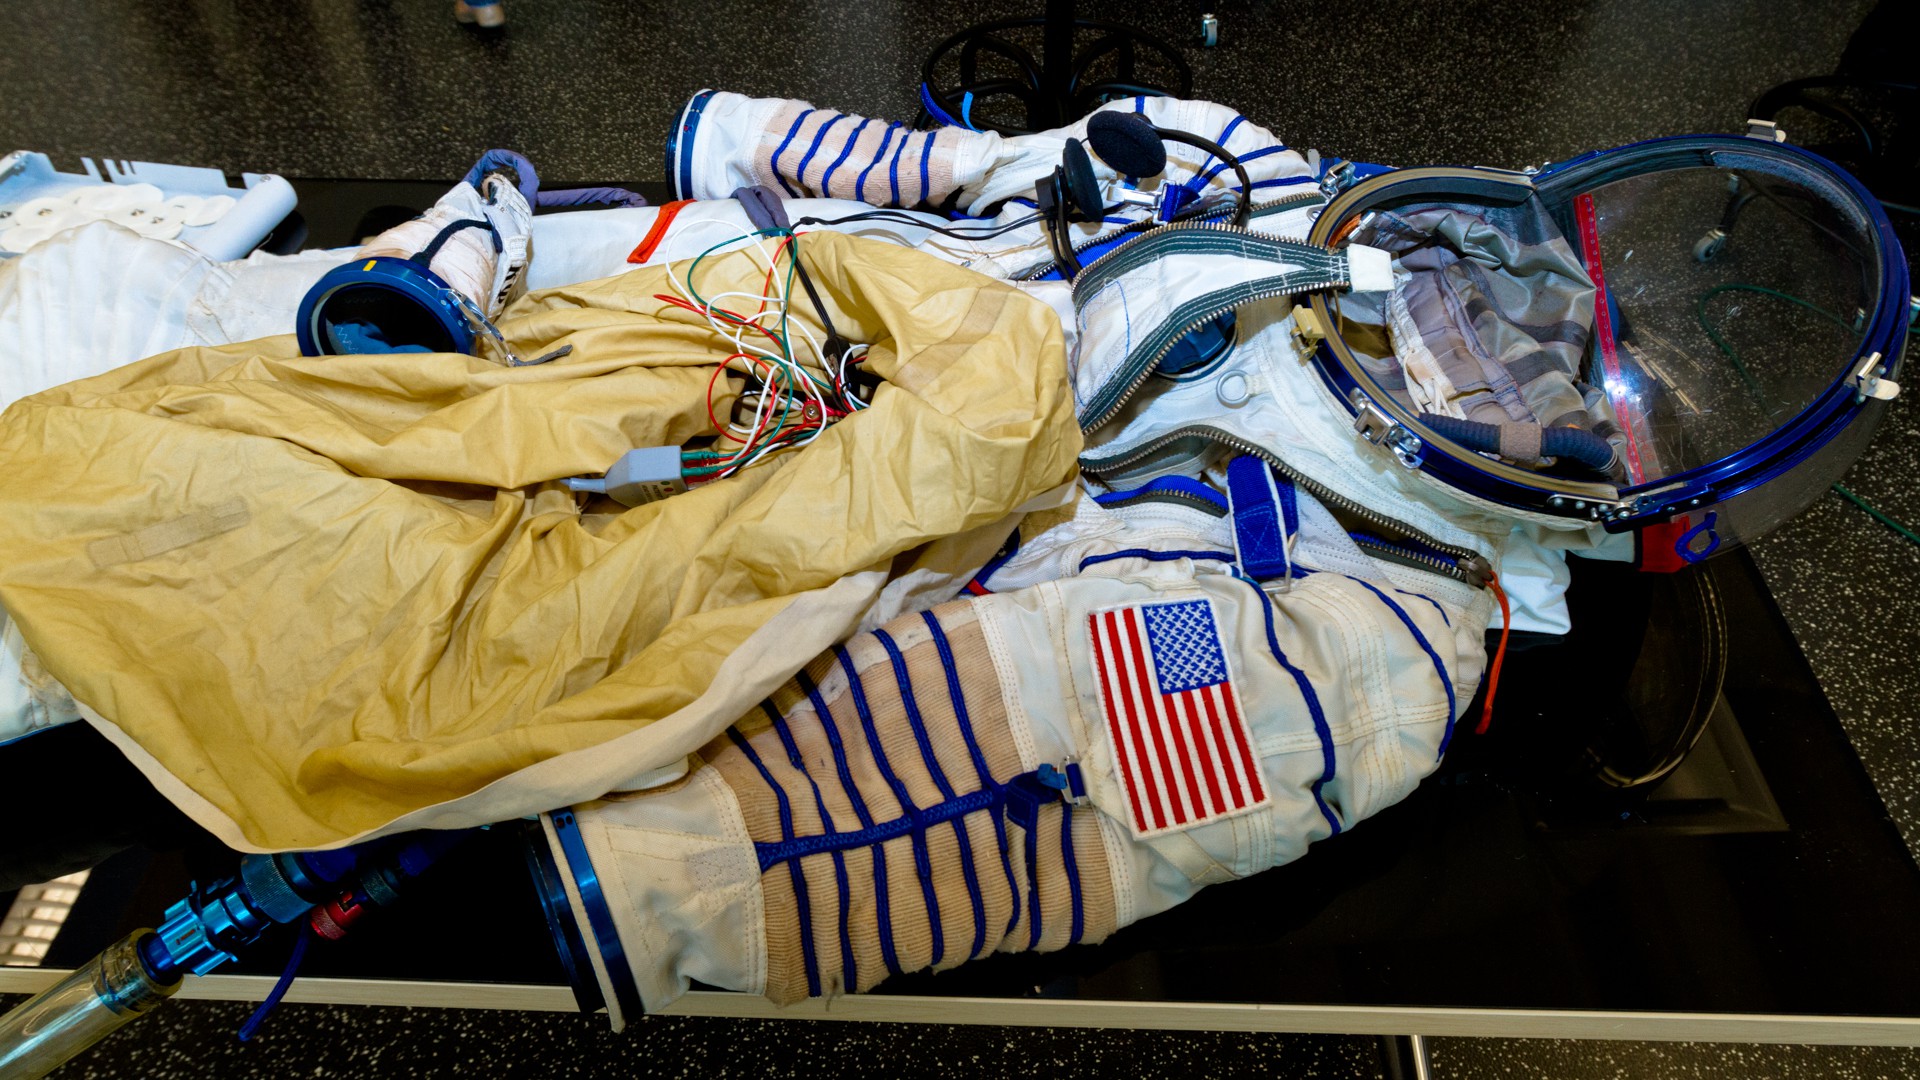 A NASA space suit